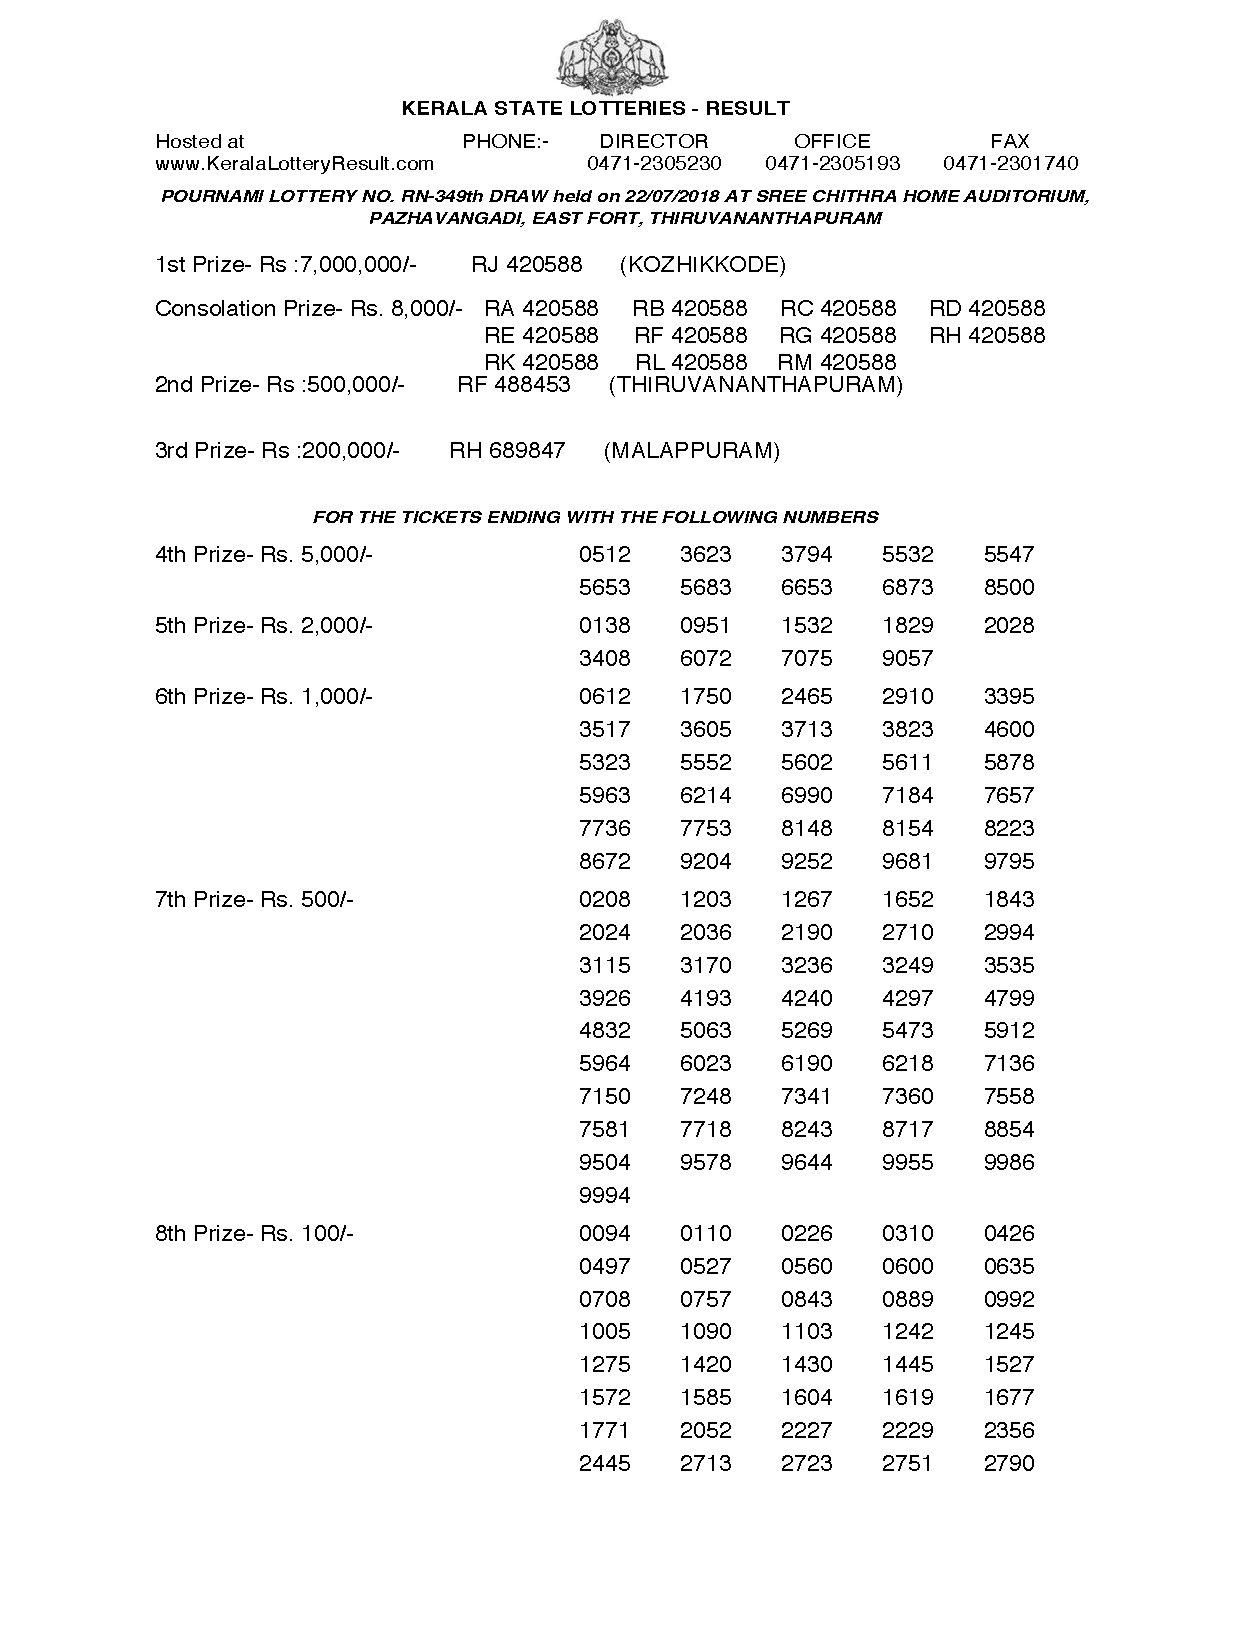 Pournami RN349 Kerala Lottery Results Screenshot: Page 1